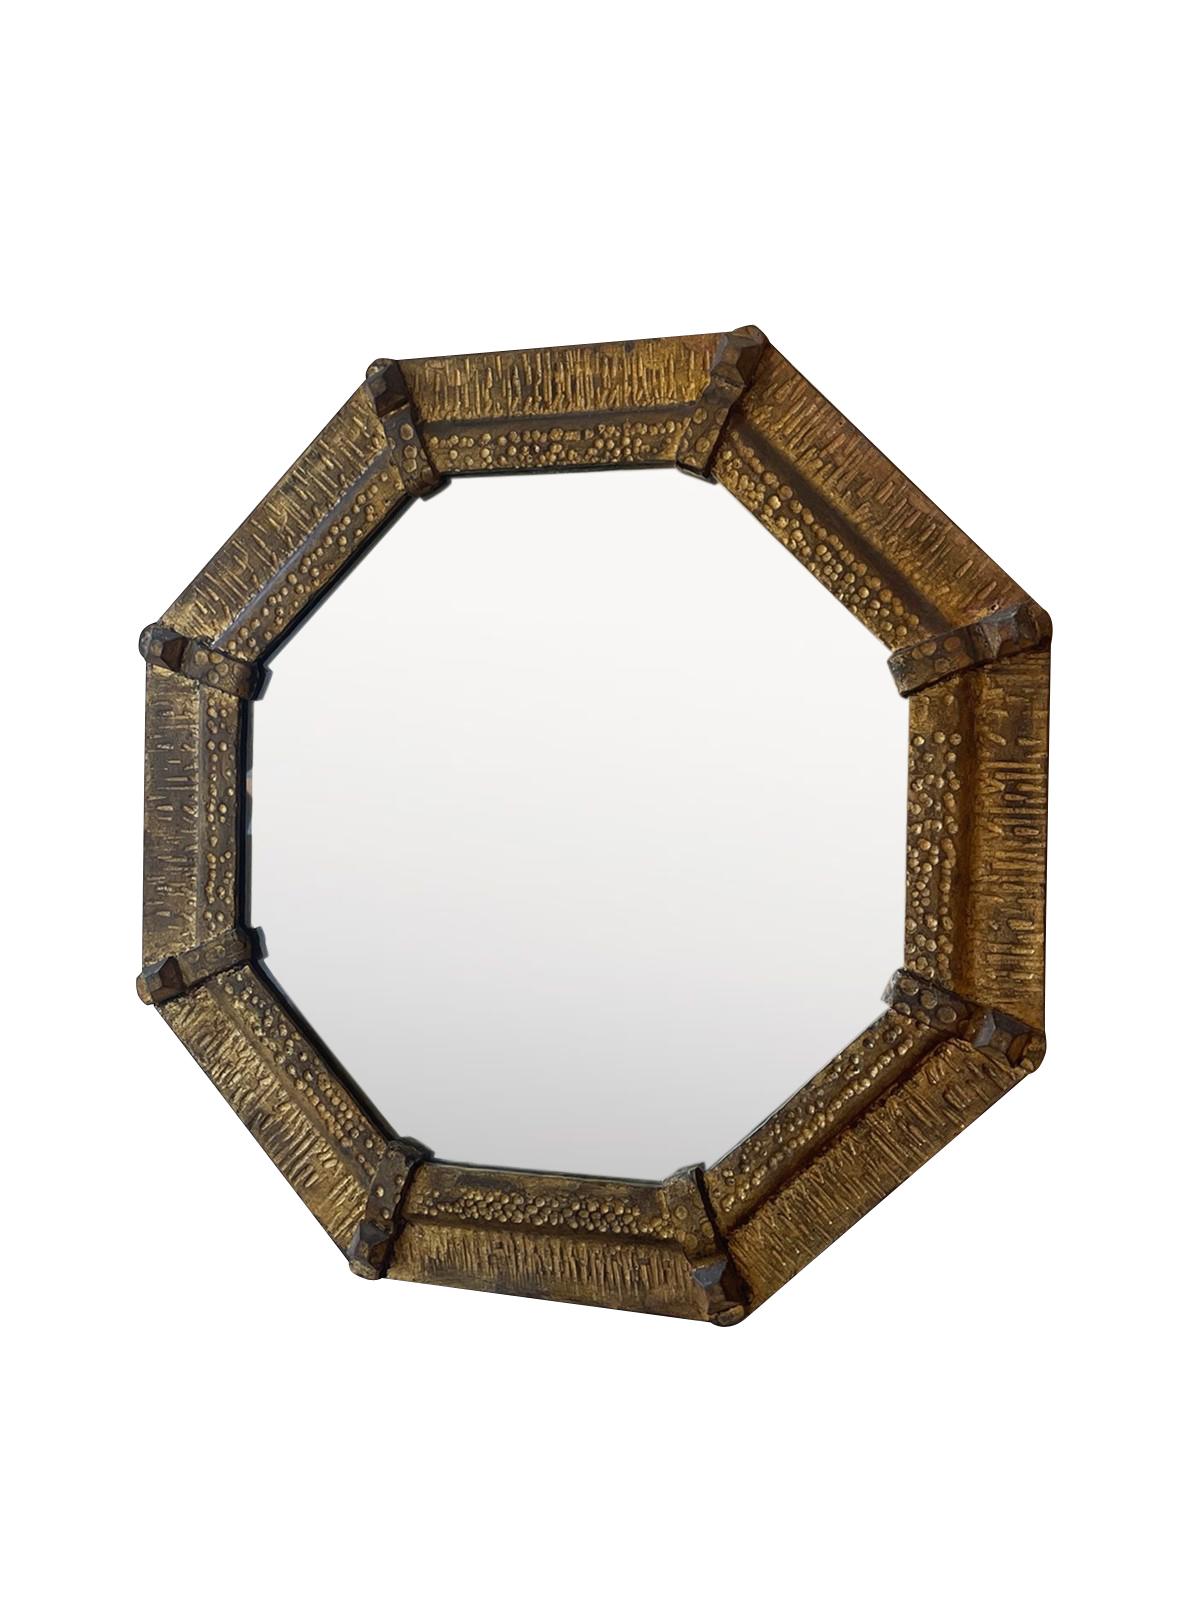 1950's Spanish octagonal shape mirror in gold gilt metal frame.
Decorative hammered design.
 